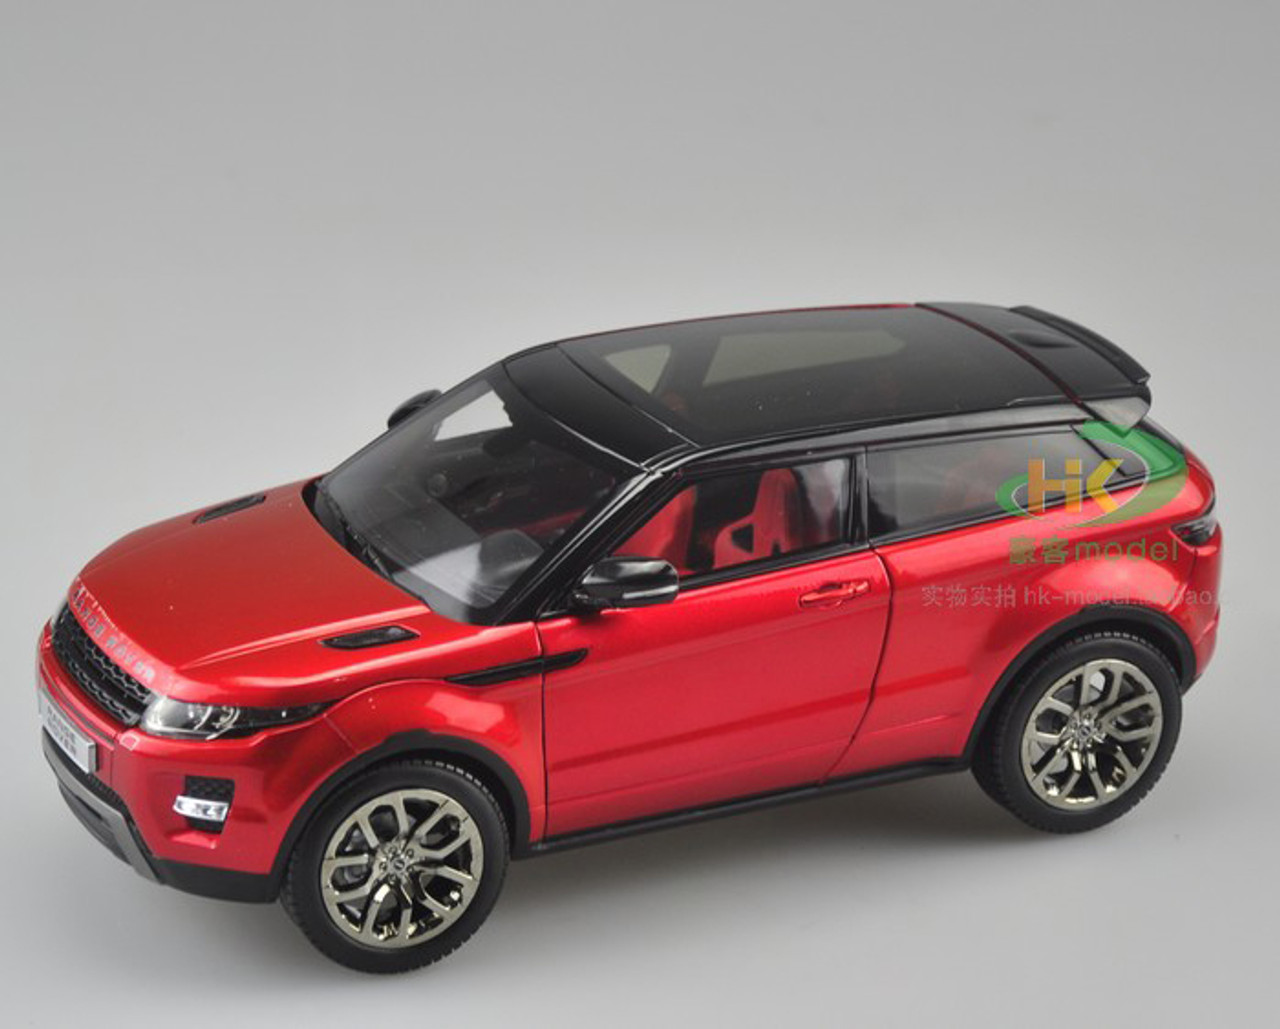 1/18 GTAutos Range Rover Evoque (Red) Diecast Car Model